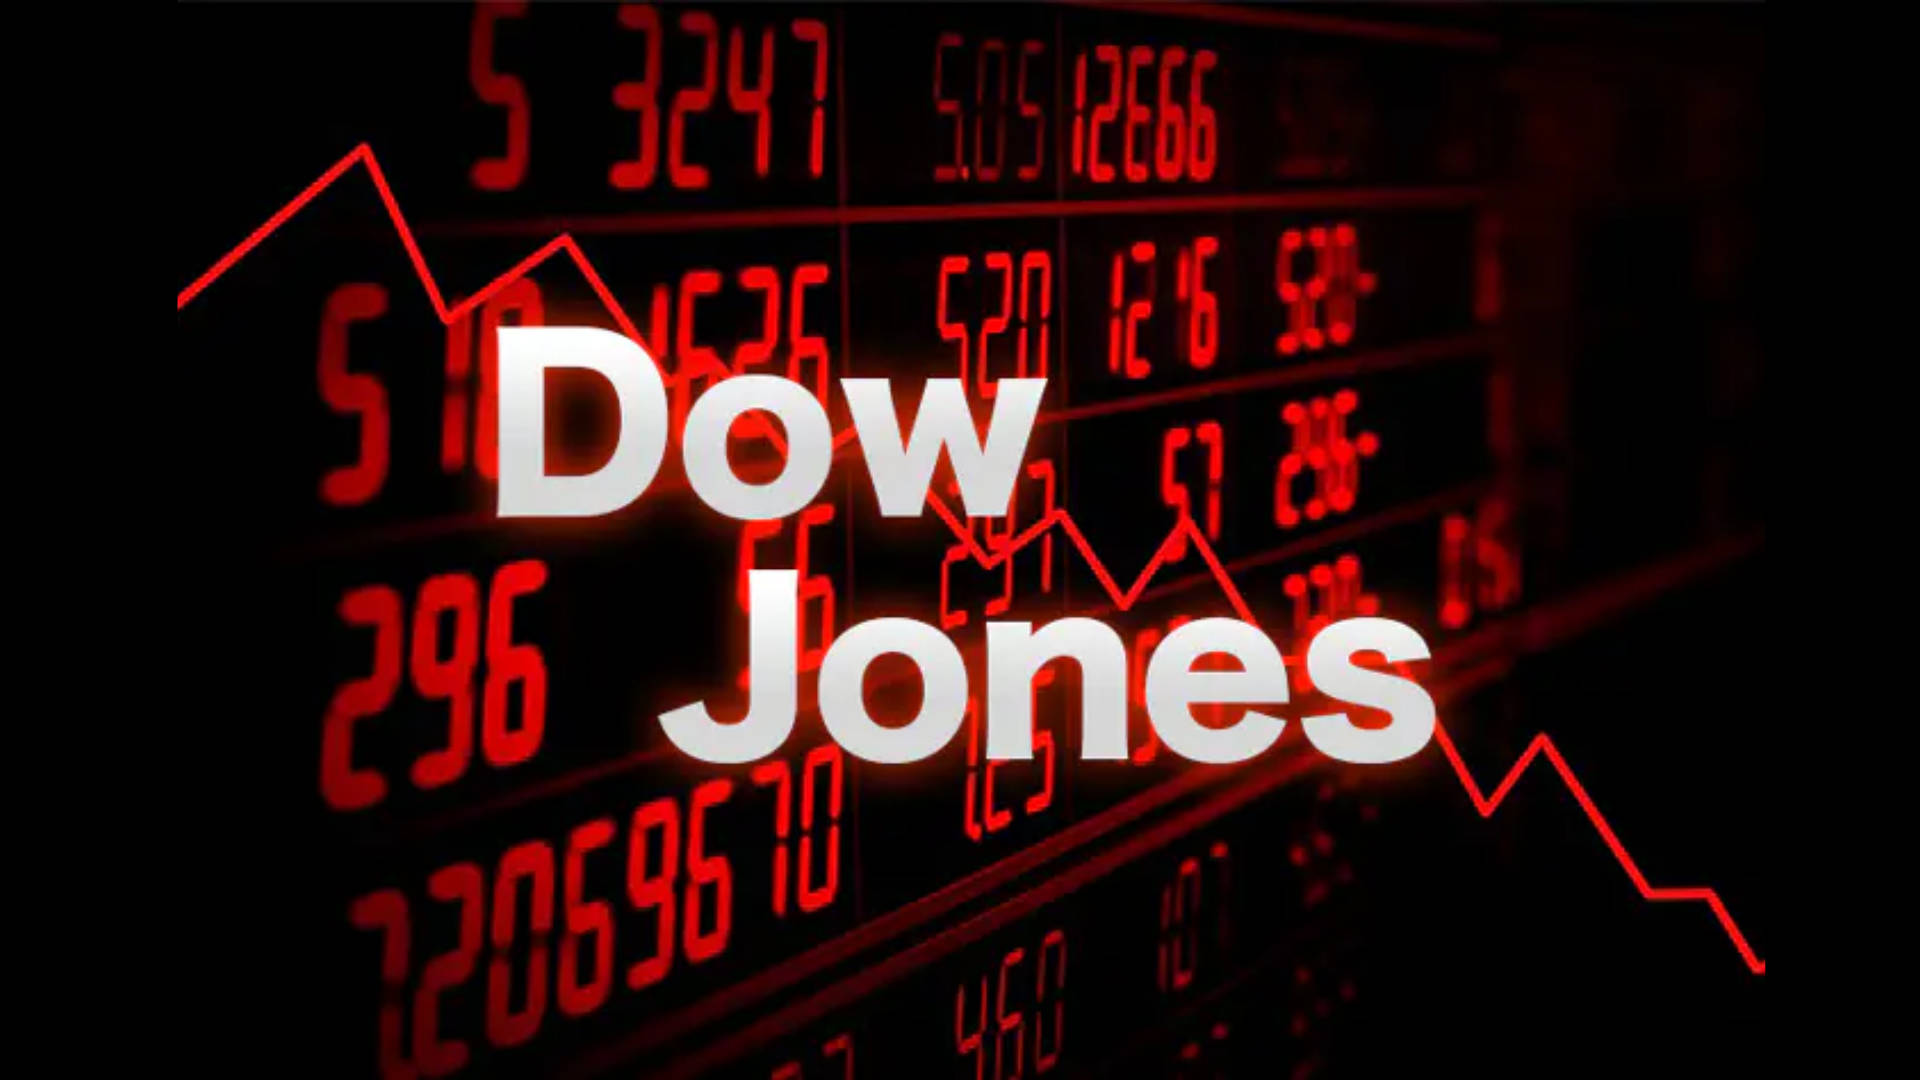 Dow Jones In Red Background